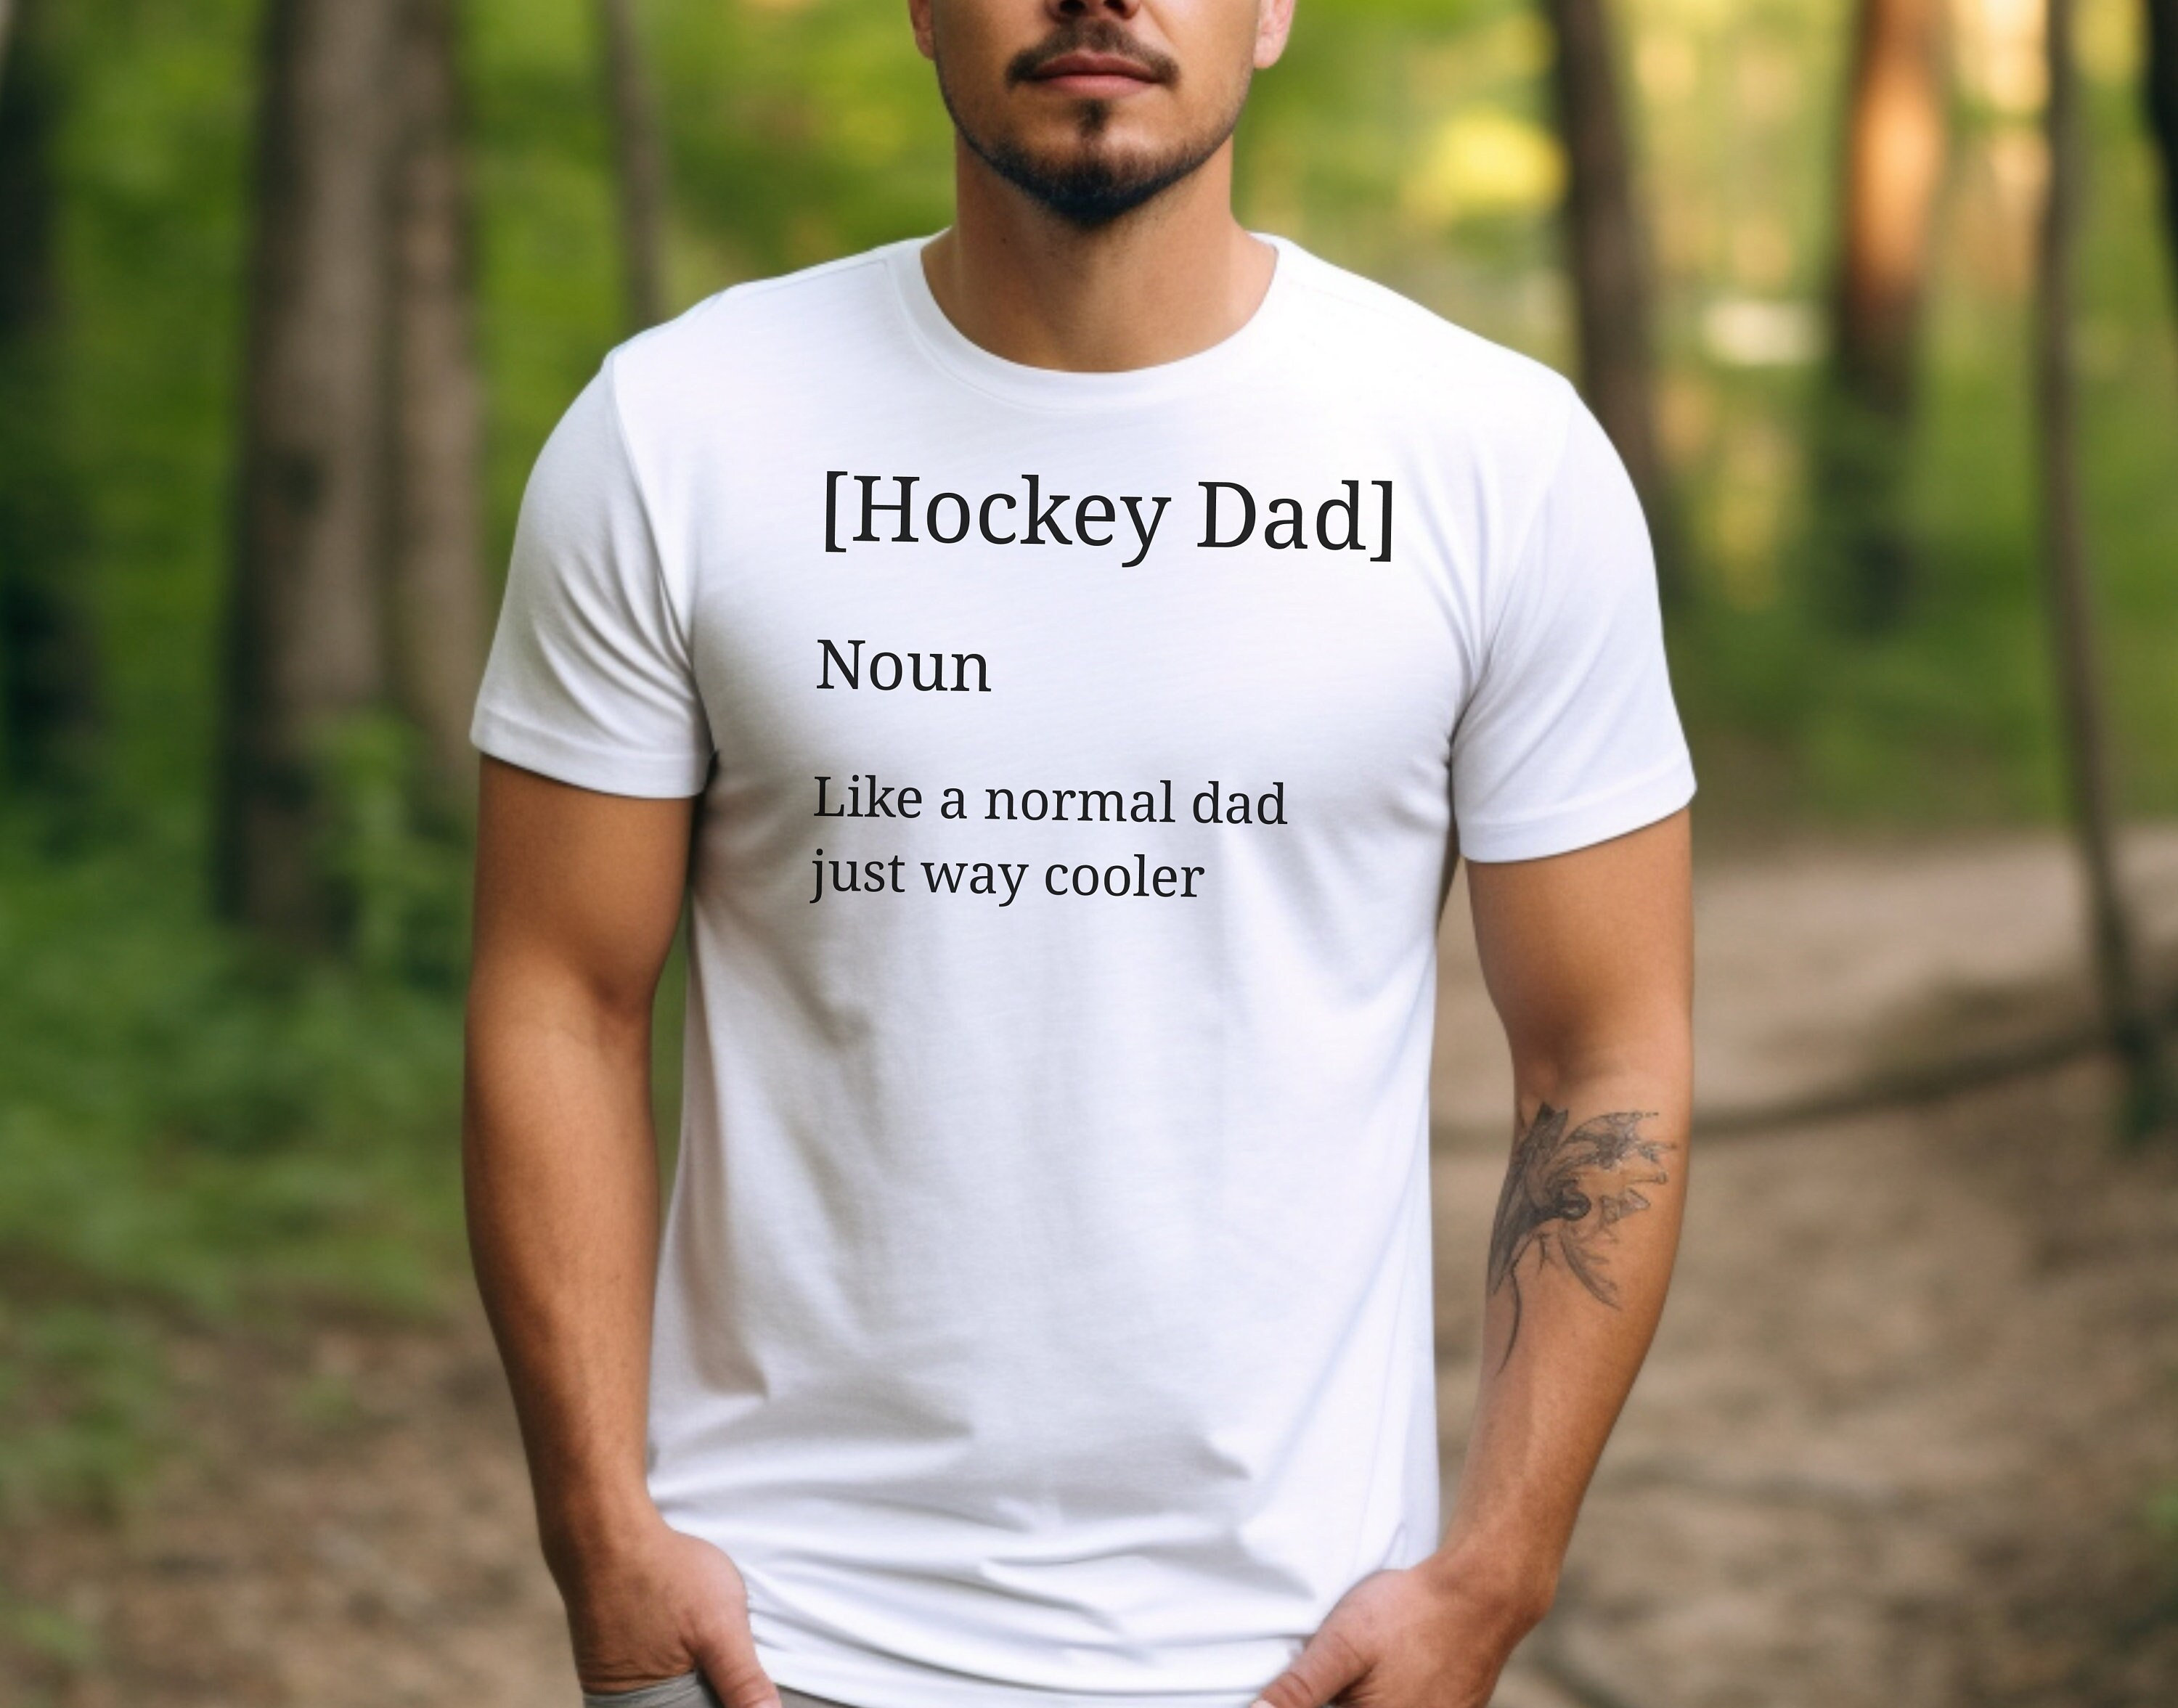 Ice Hockey Girl Definition Tshirt Funny & Sassy Sports Tee Tall Long Sleeve  T-Shirt